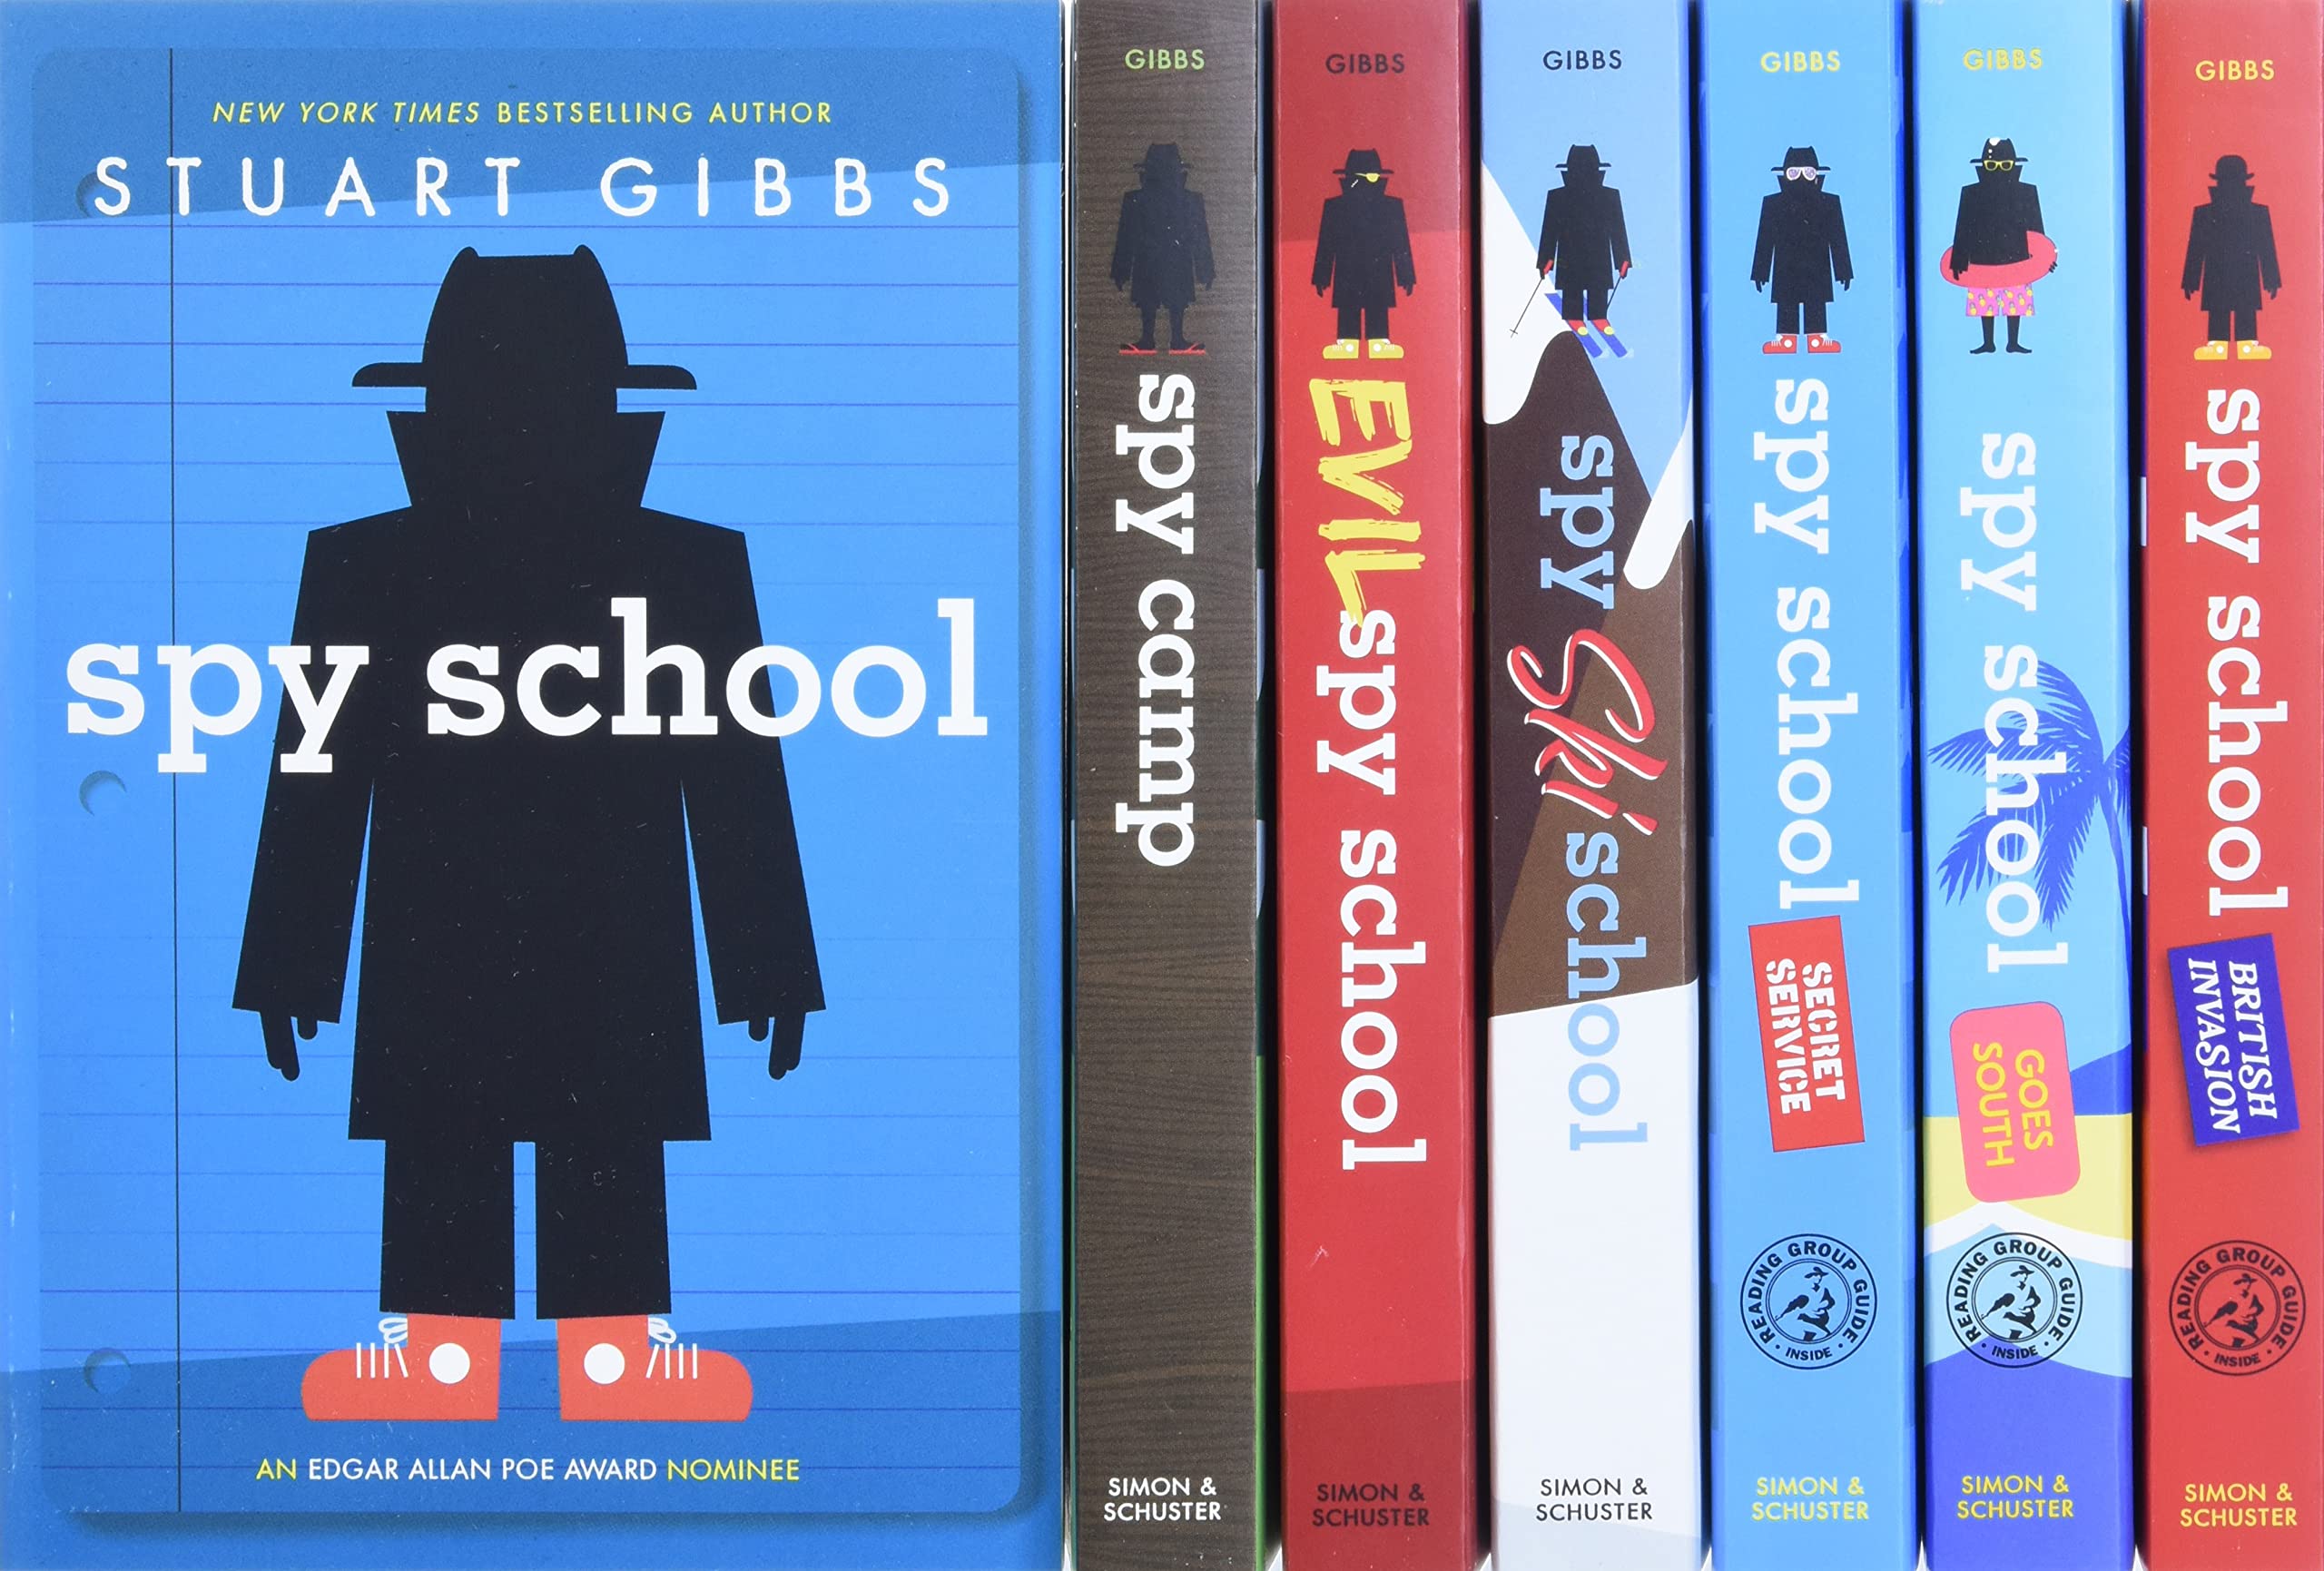 The Spy School vs. SPYDER Paperback Collection (Boxed Set): Spy School; Spy Camp; Evil Spy School; Spy Ski School; Spy School Secret Service; Spy School Goes South; Spy School British Invasion